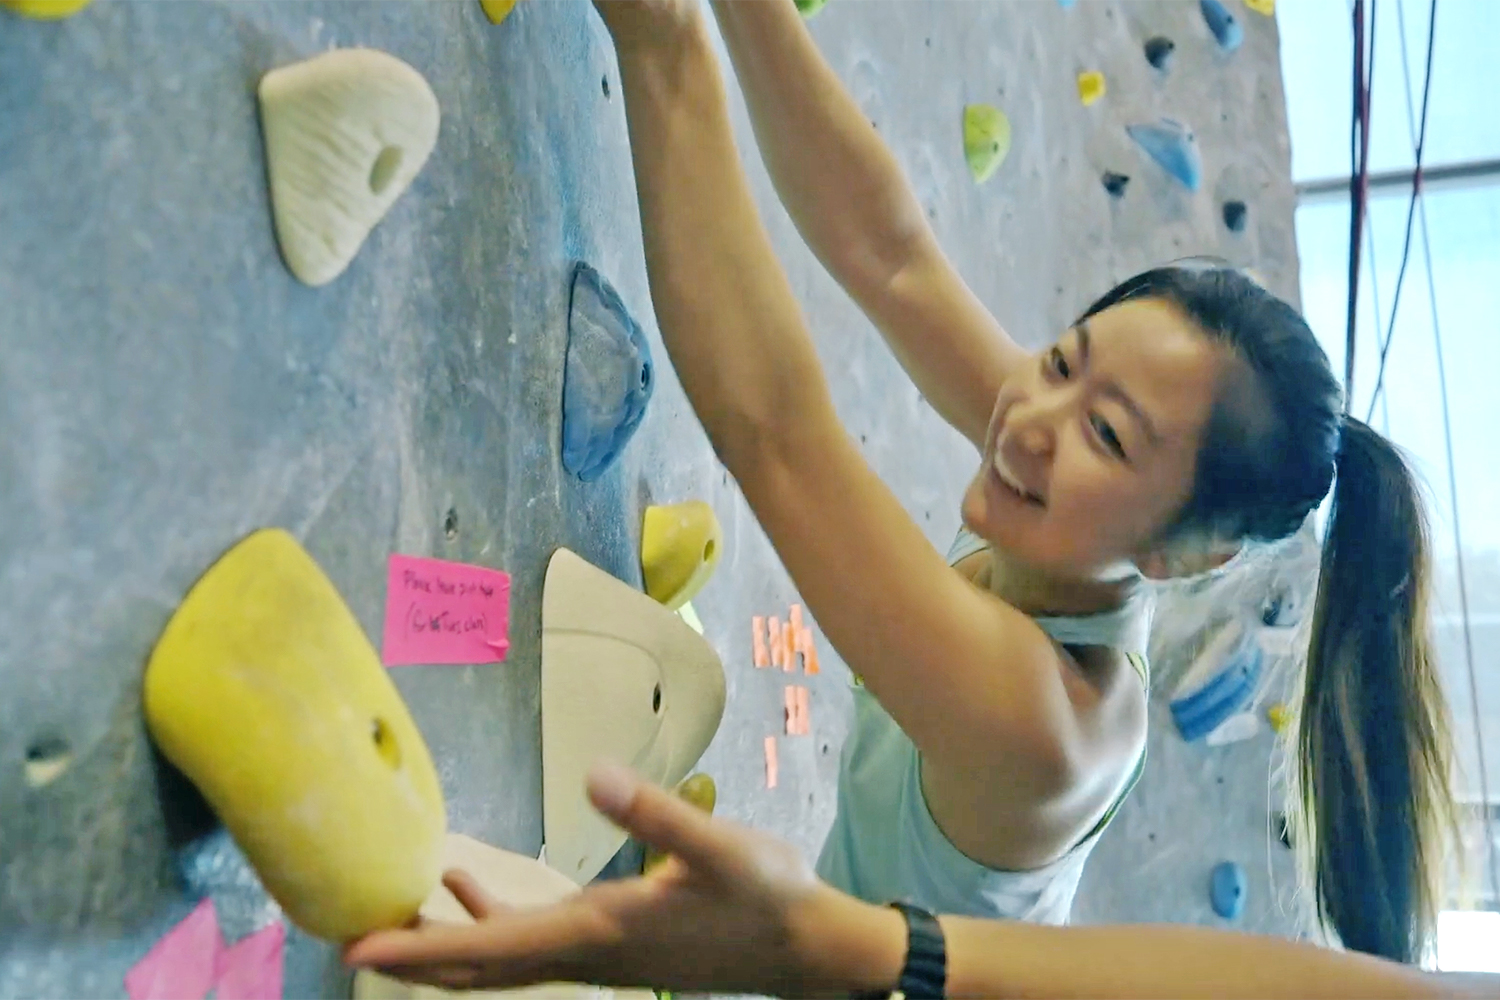 Stanford graduate students teach neuroscience through the lens of rock climbing